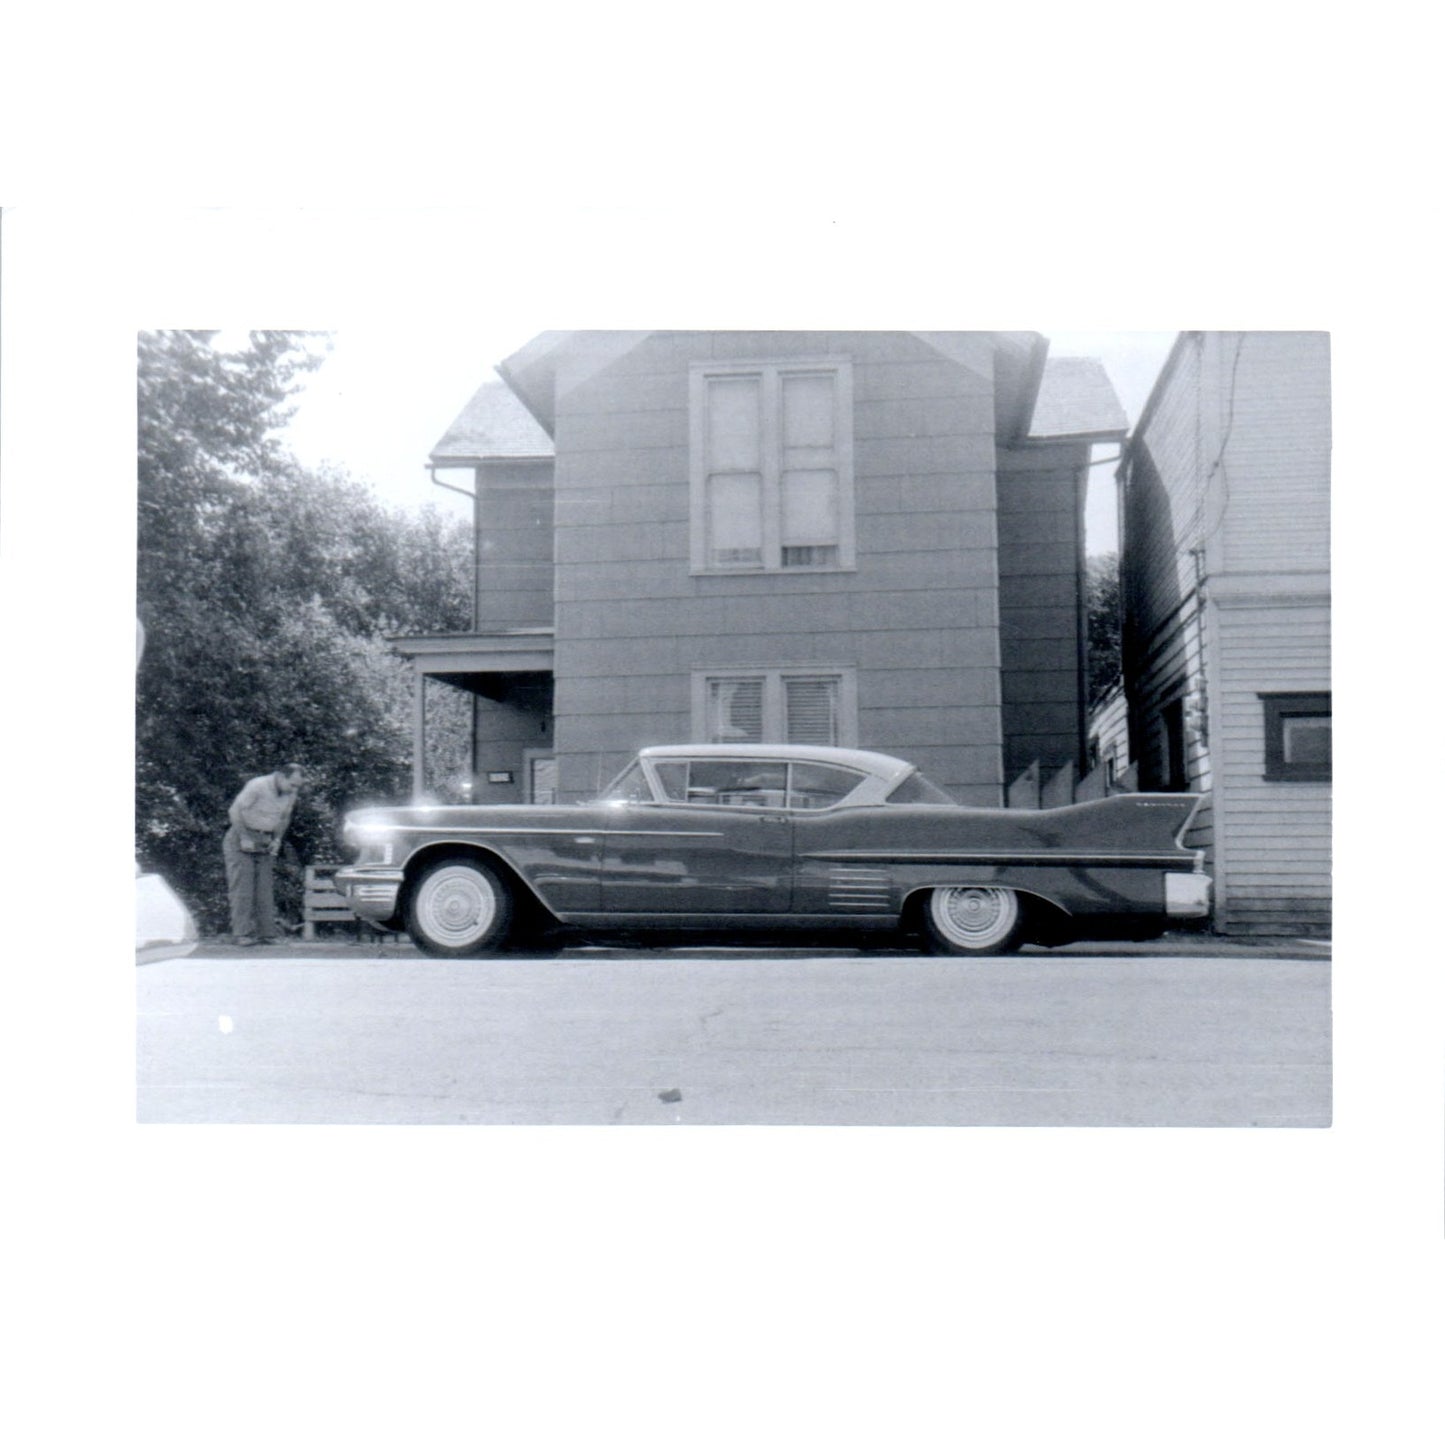 1958 Cadillac Coupe Deville Photograph 4x5.5" AB9